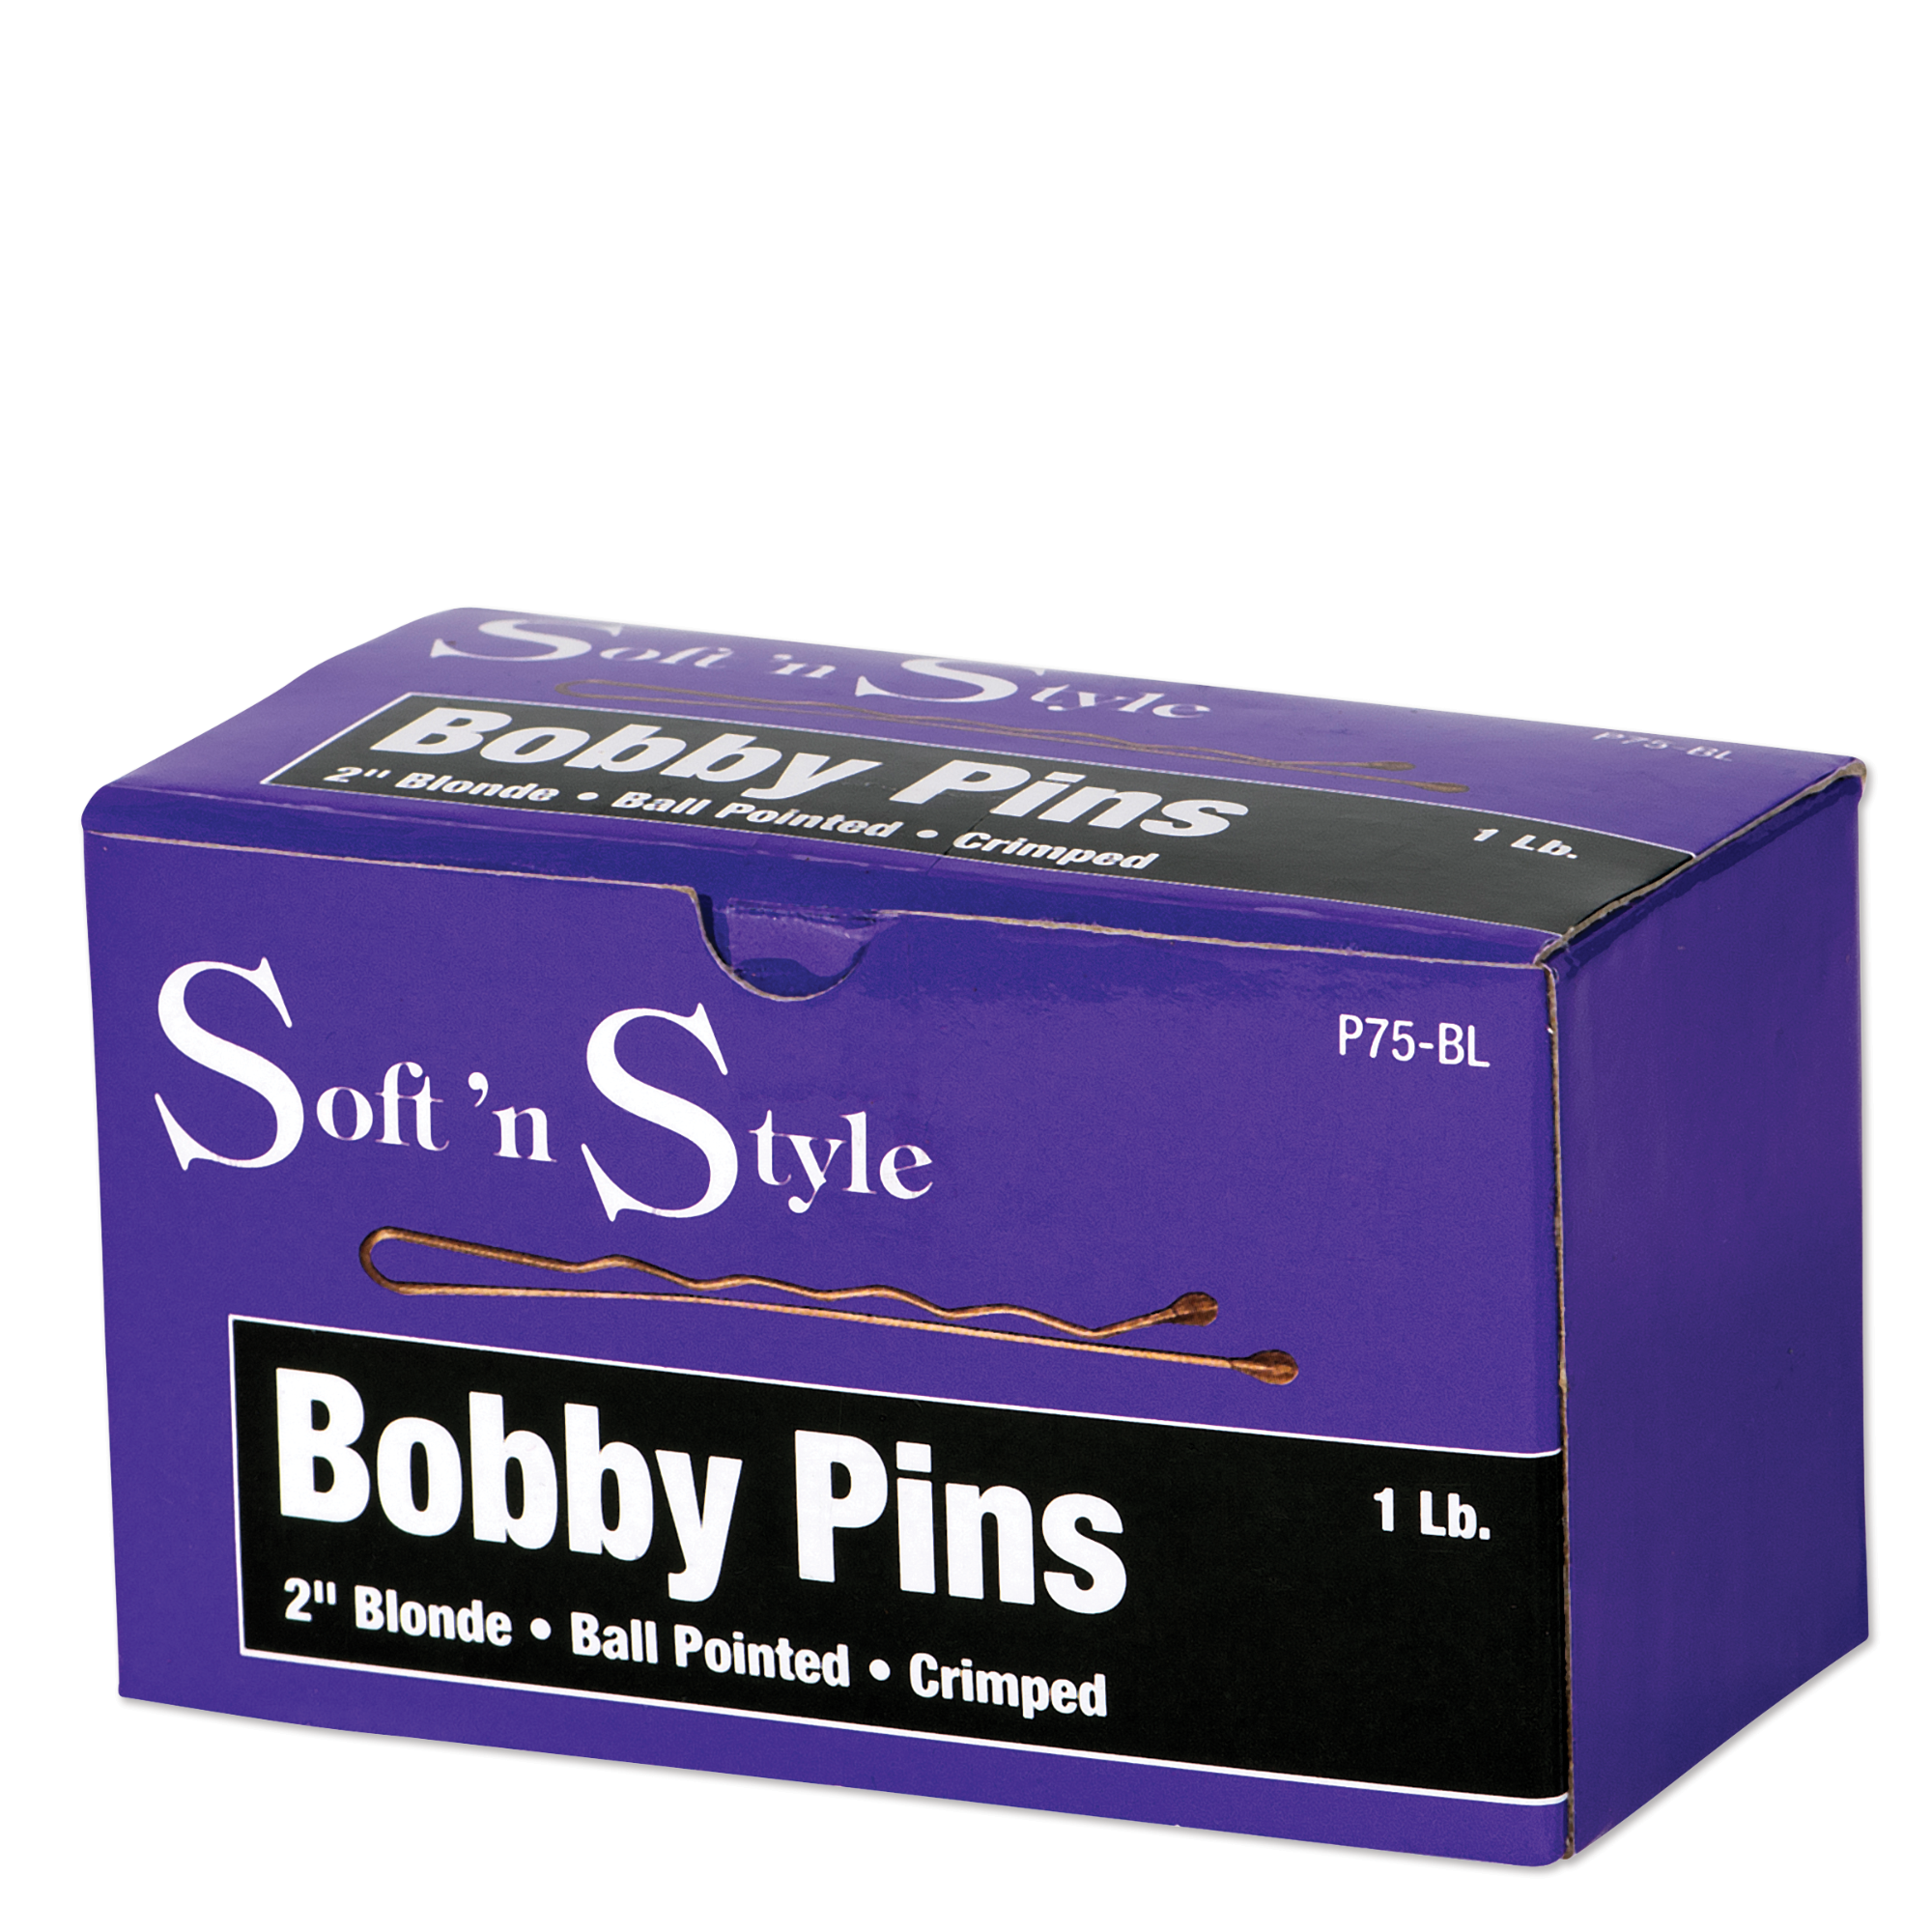 Bobby Pins, Blonde, 1 lb. box - 2"